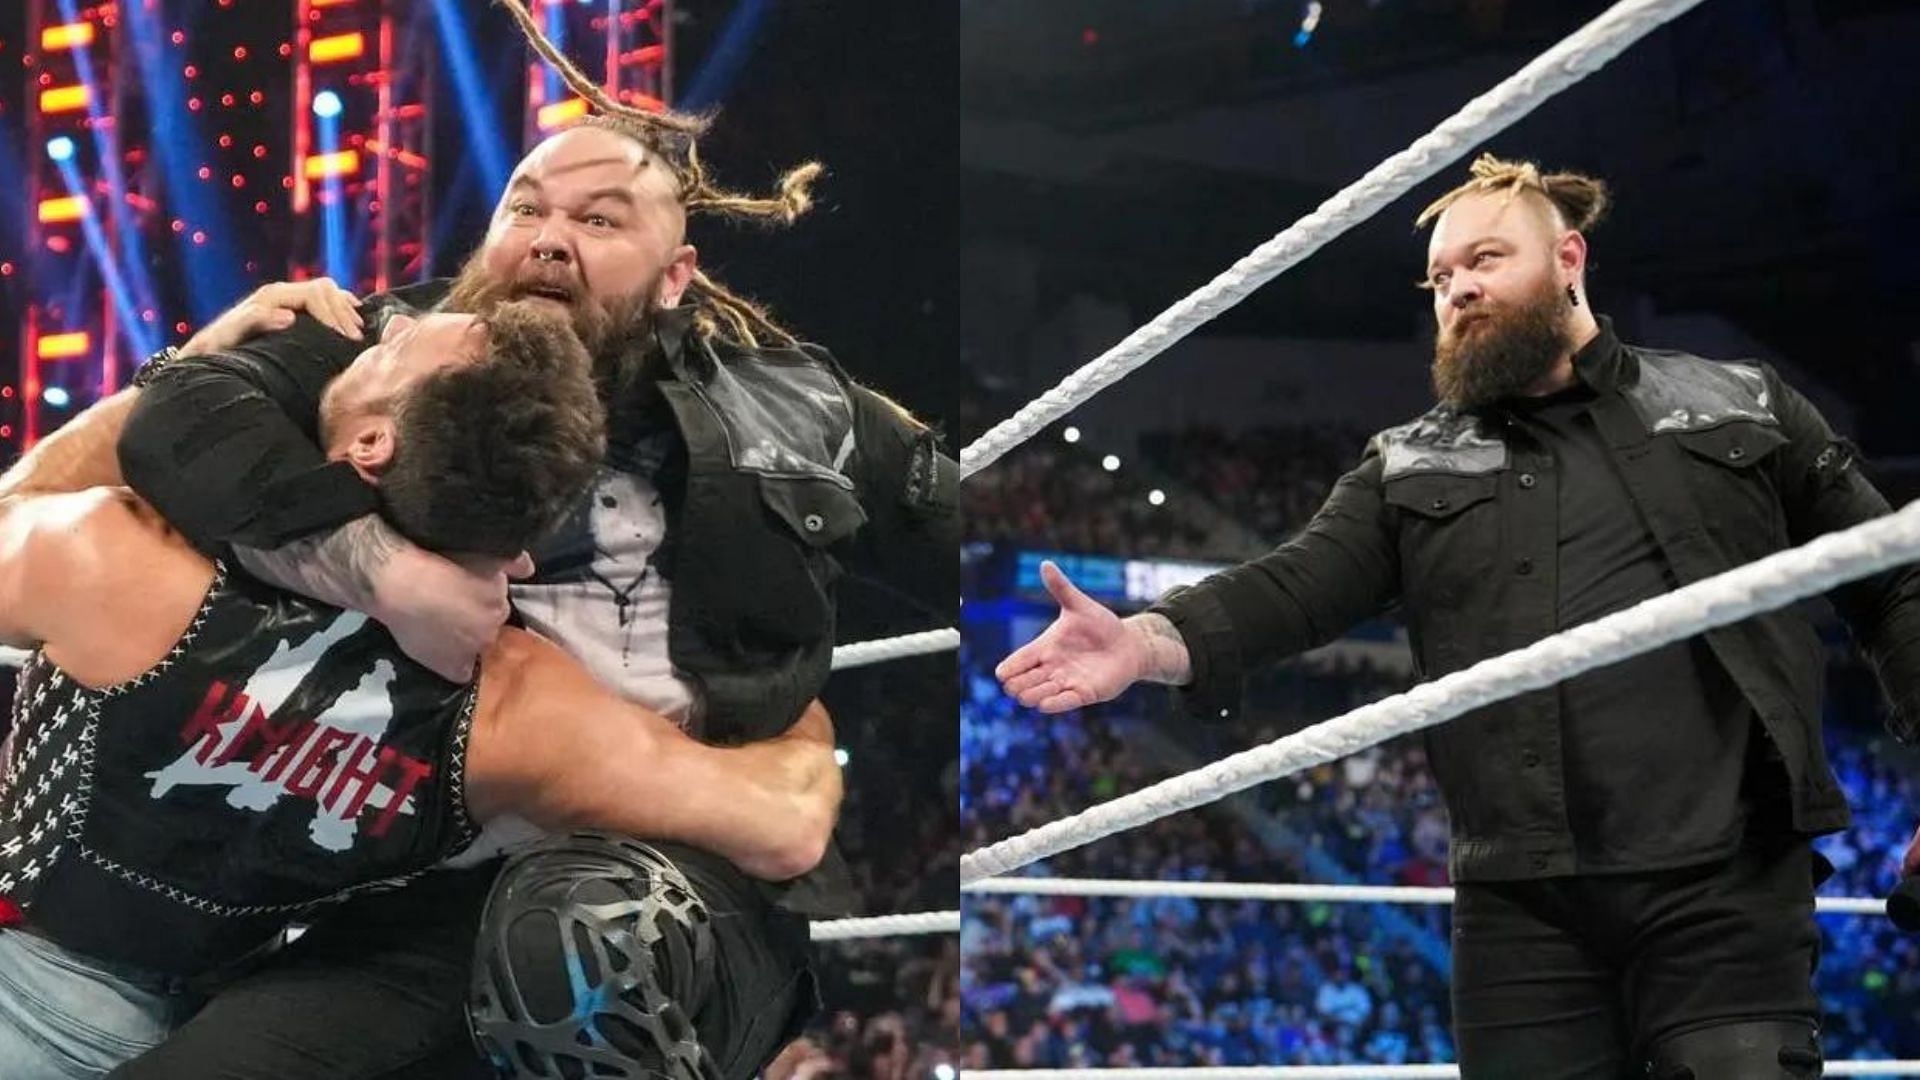 Bray Wyatt defeated LA Knight at the Royal Rumble PLE